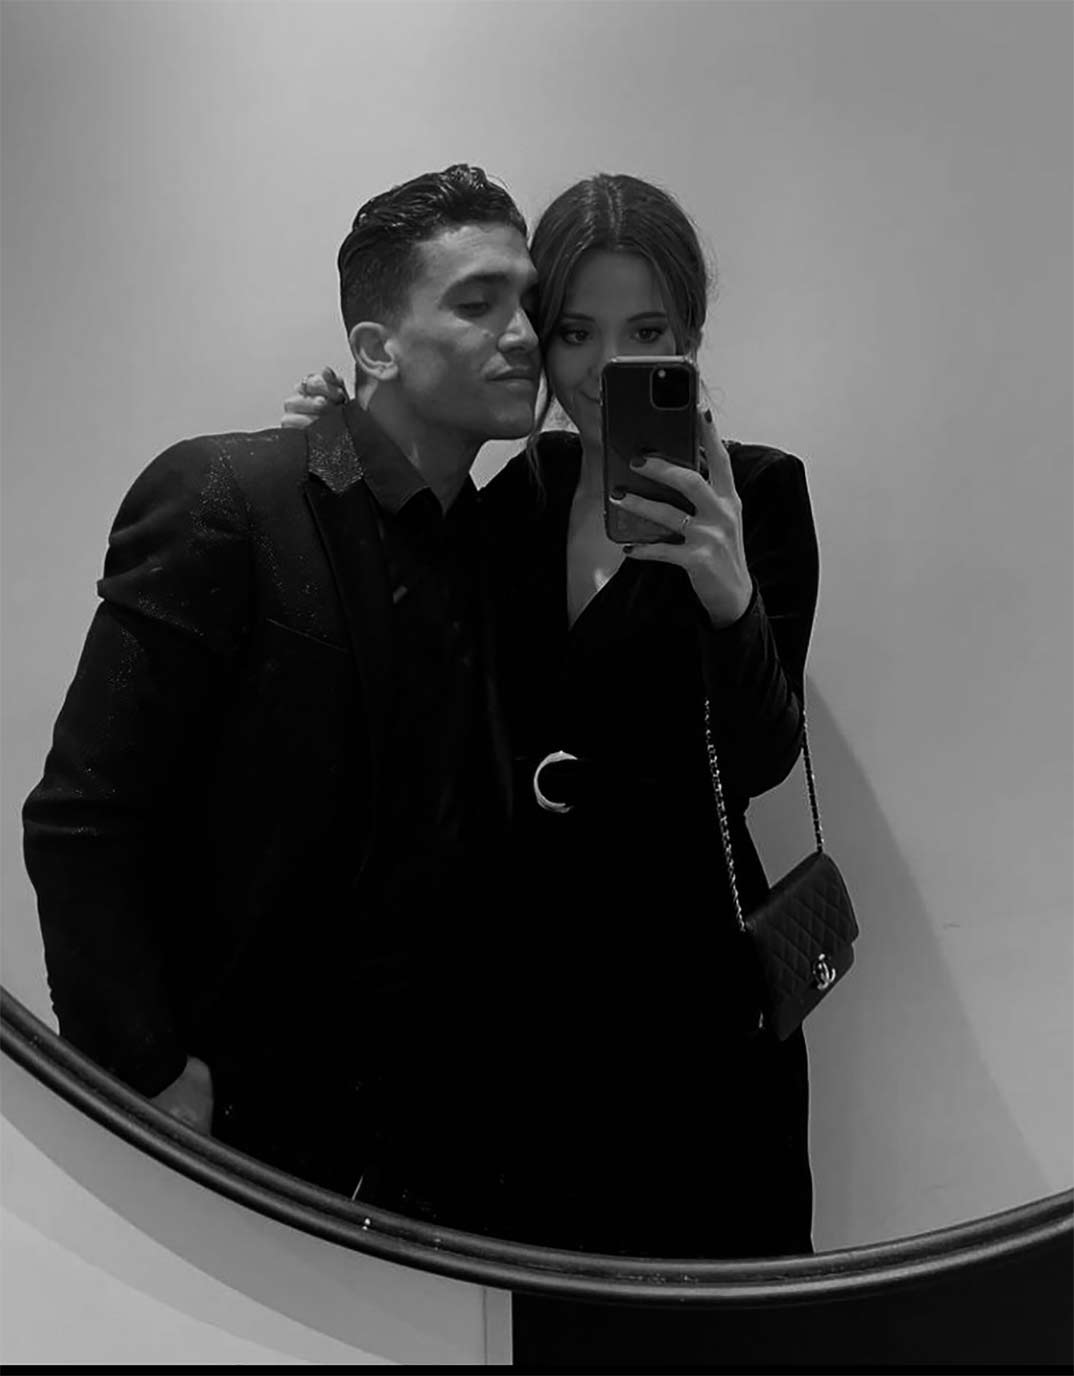 Jaime Lorente y Marta Goenaga © Instagram